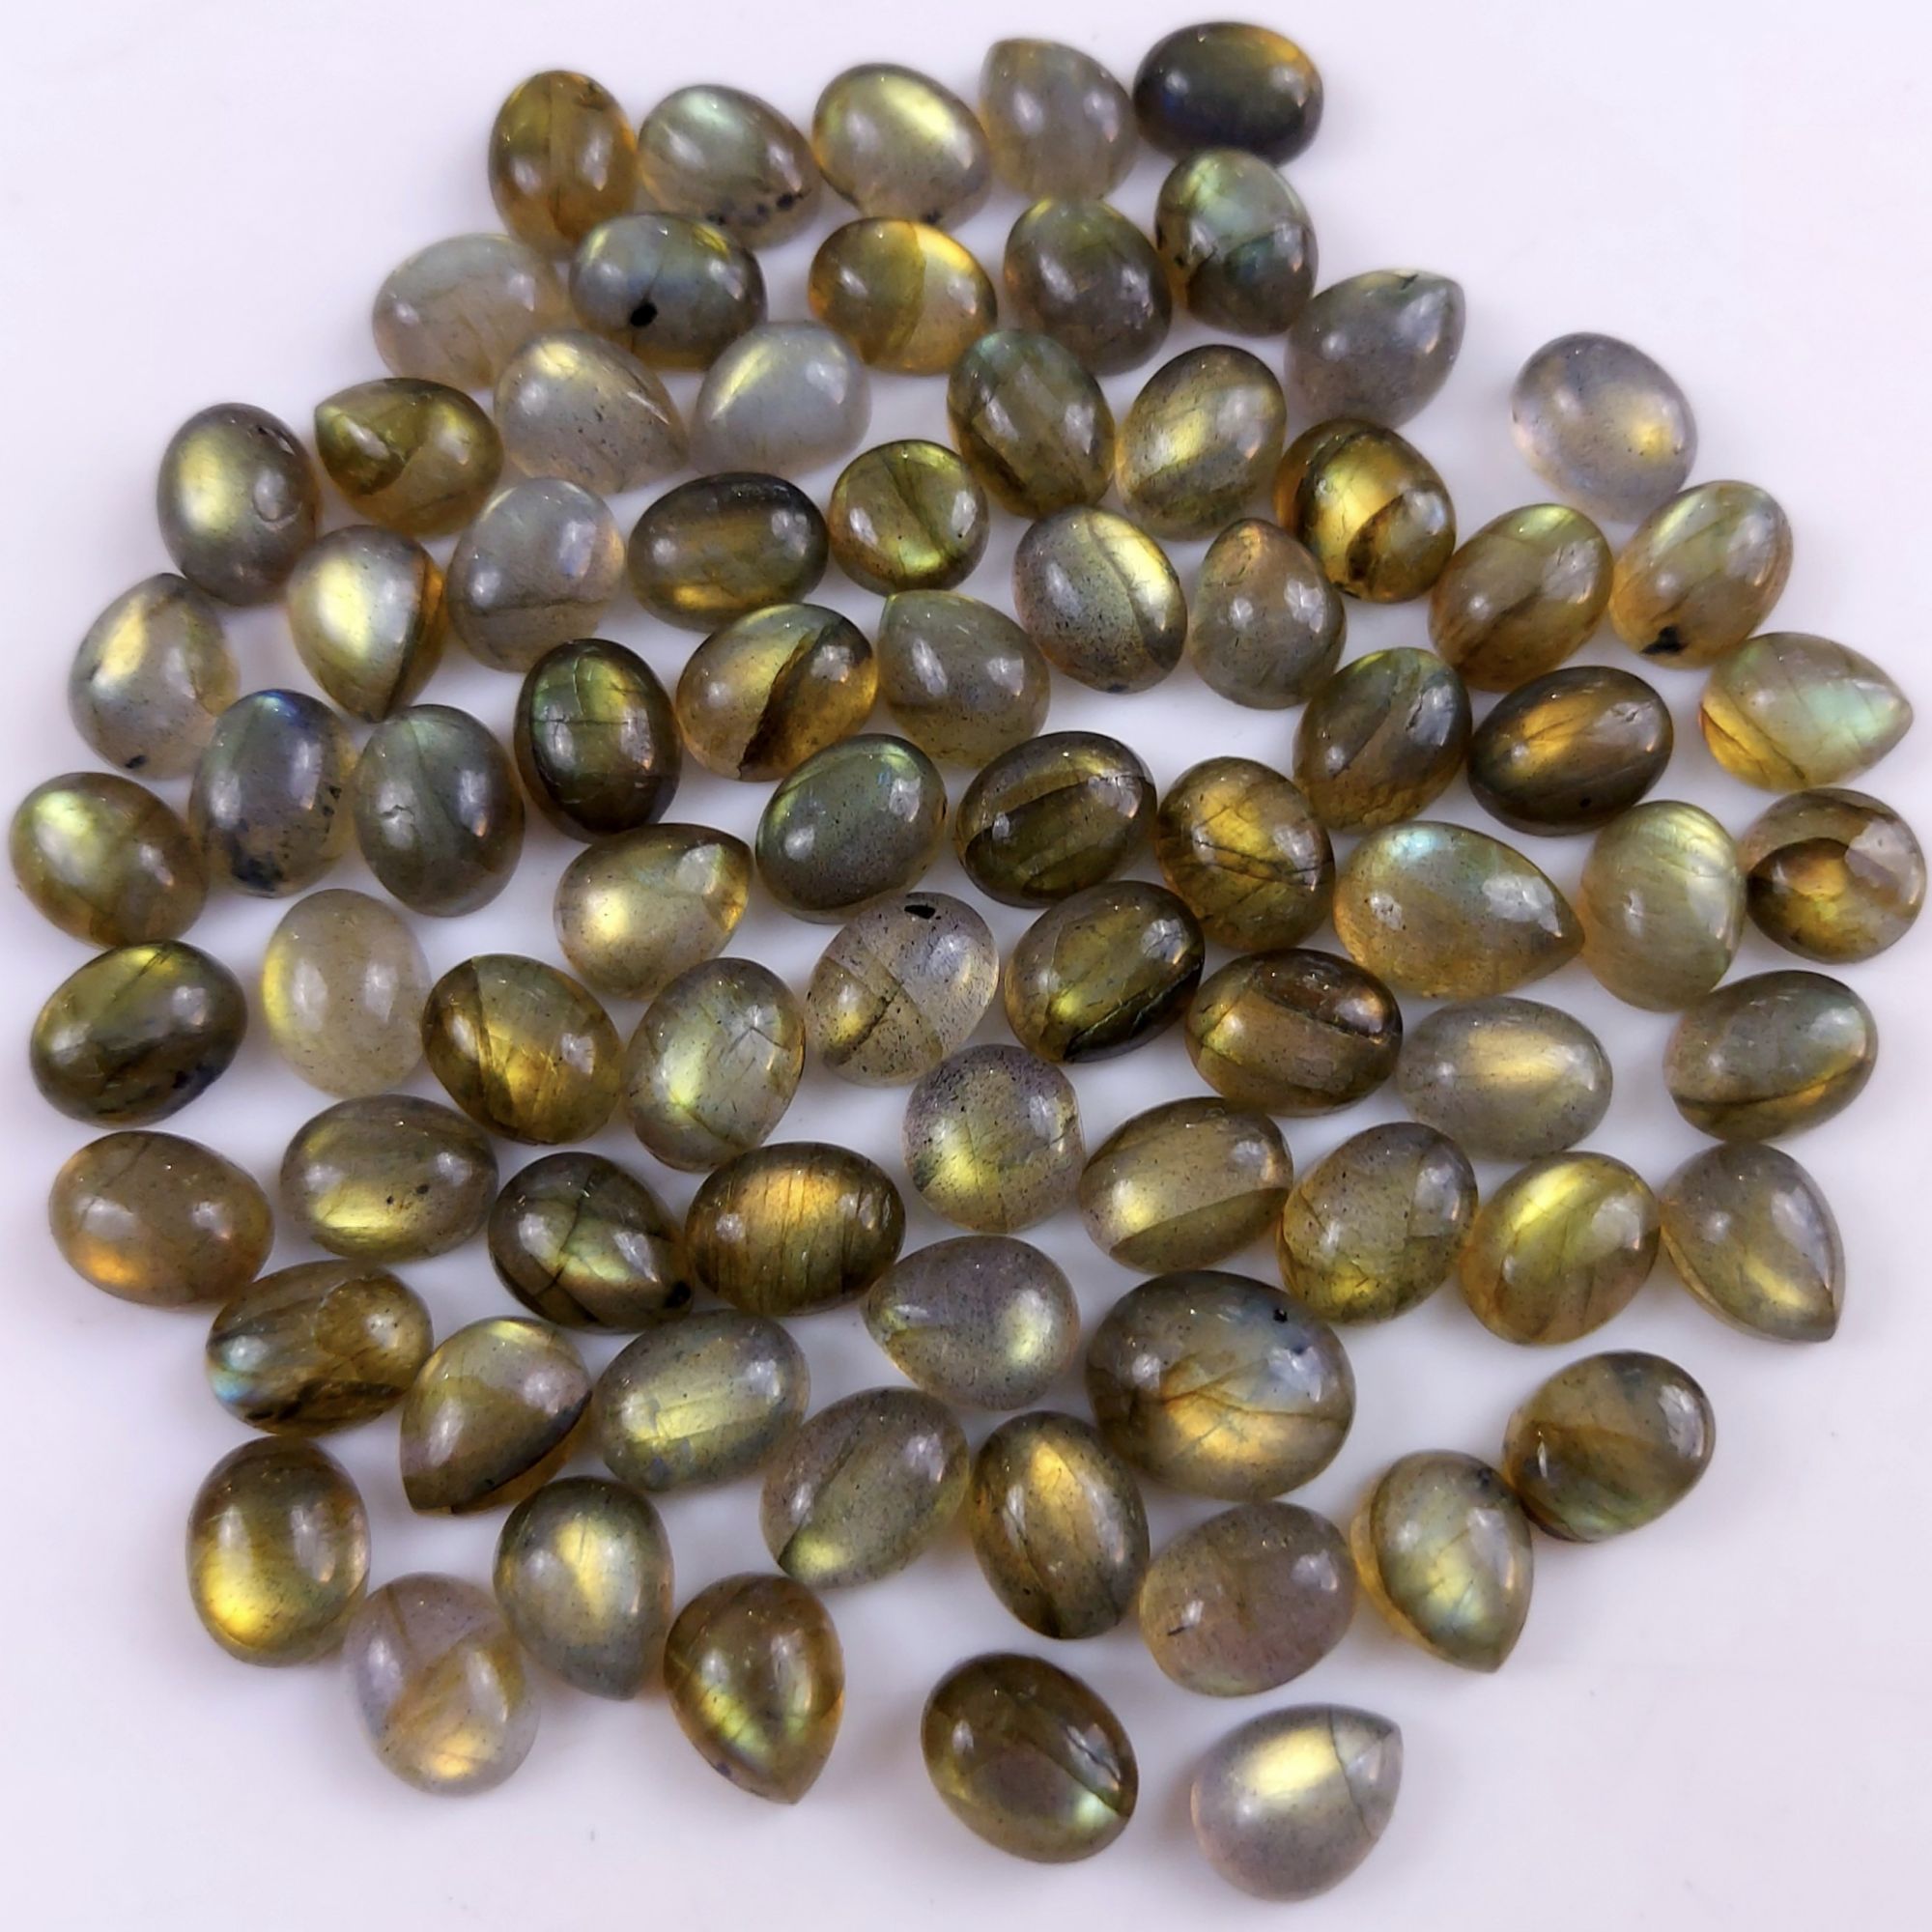 78 Pcs188Cts Natural Multifire Labradorite Loose Cabochon Gemstone Lot for Jewelry Making  9x7 6x4mm#1063